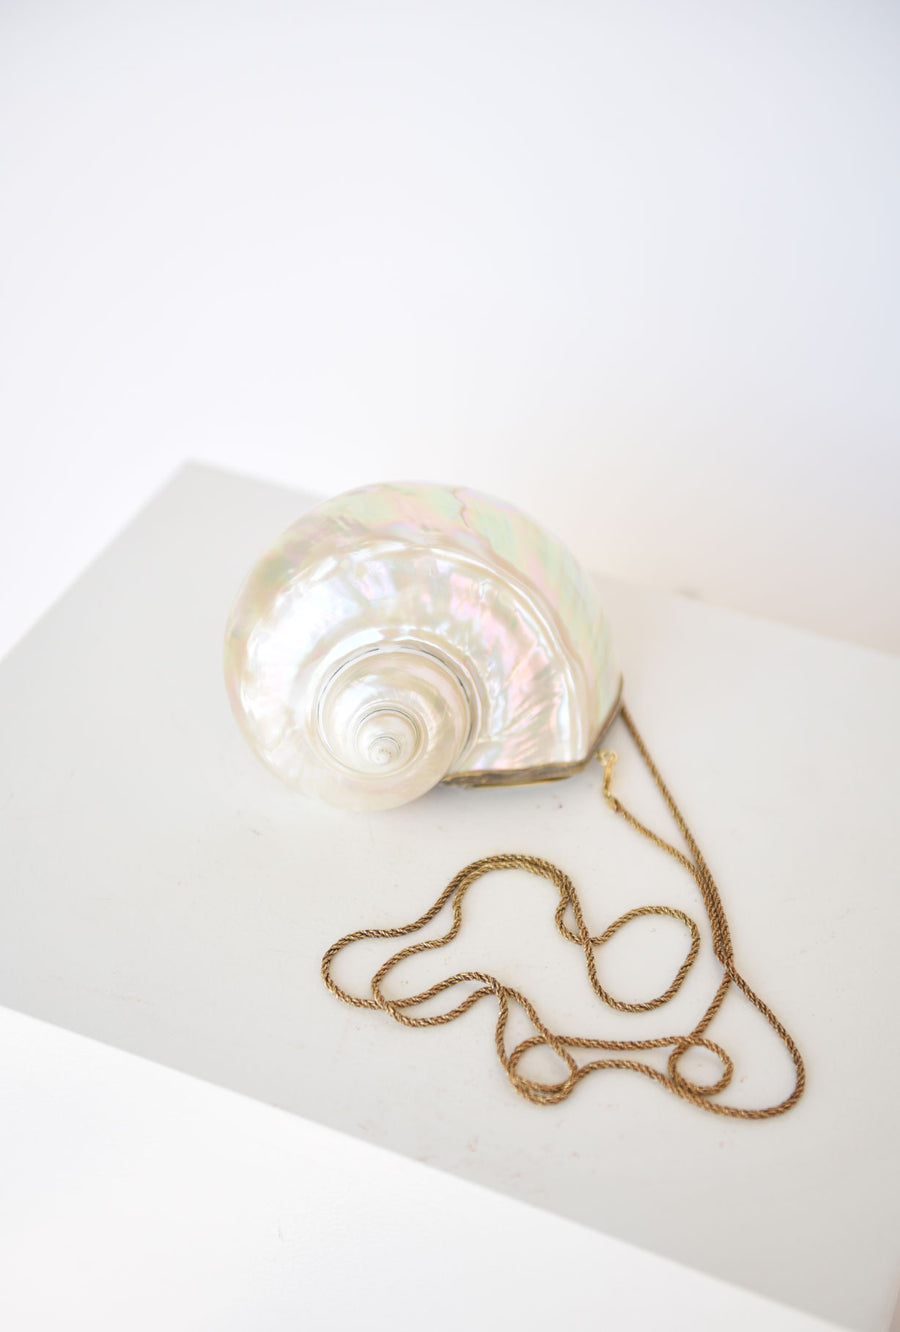 Vintage Nautilus Shell Purse